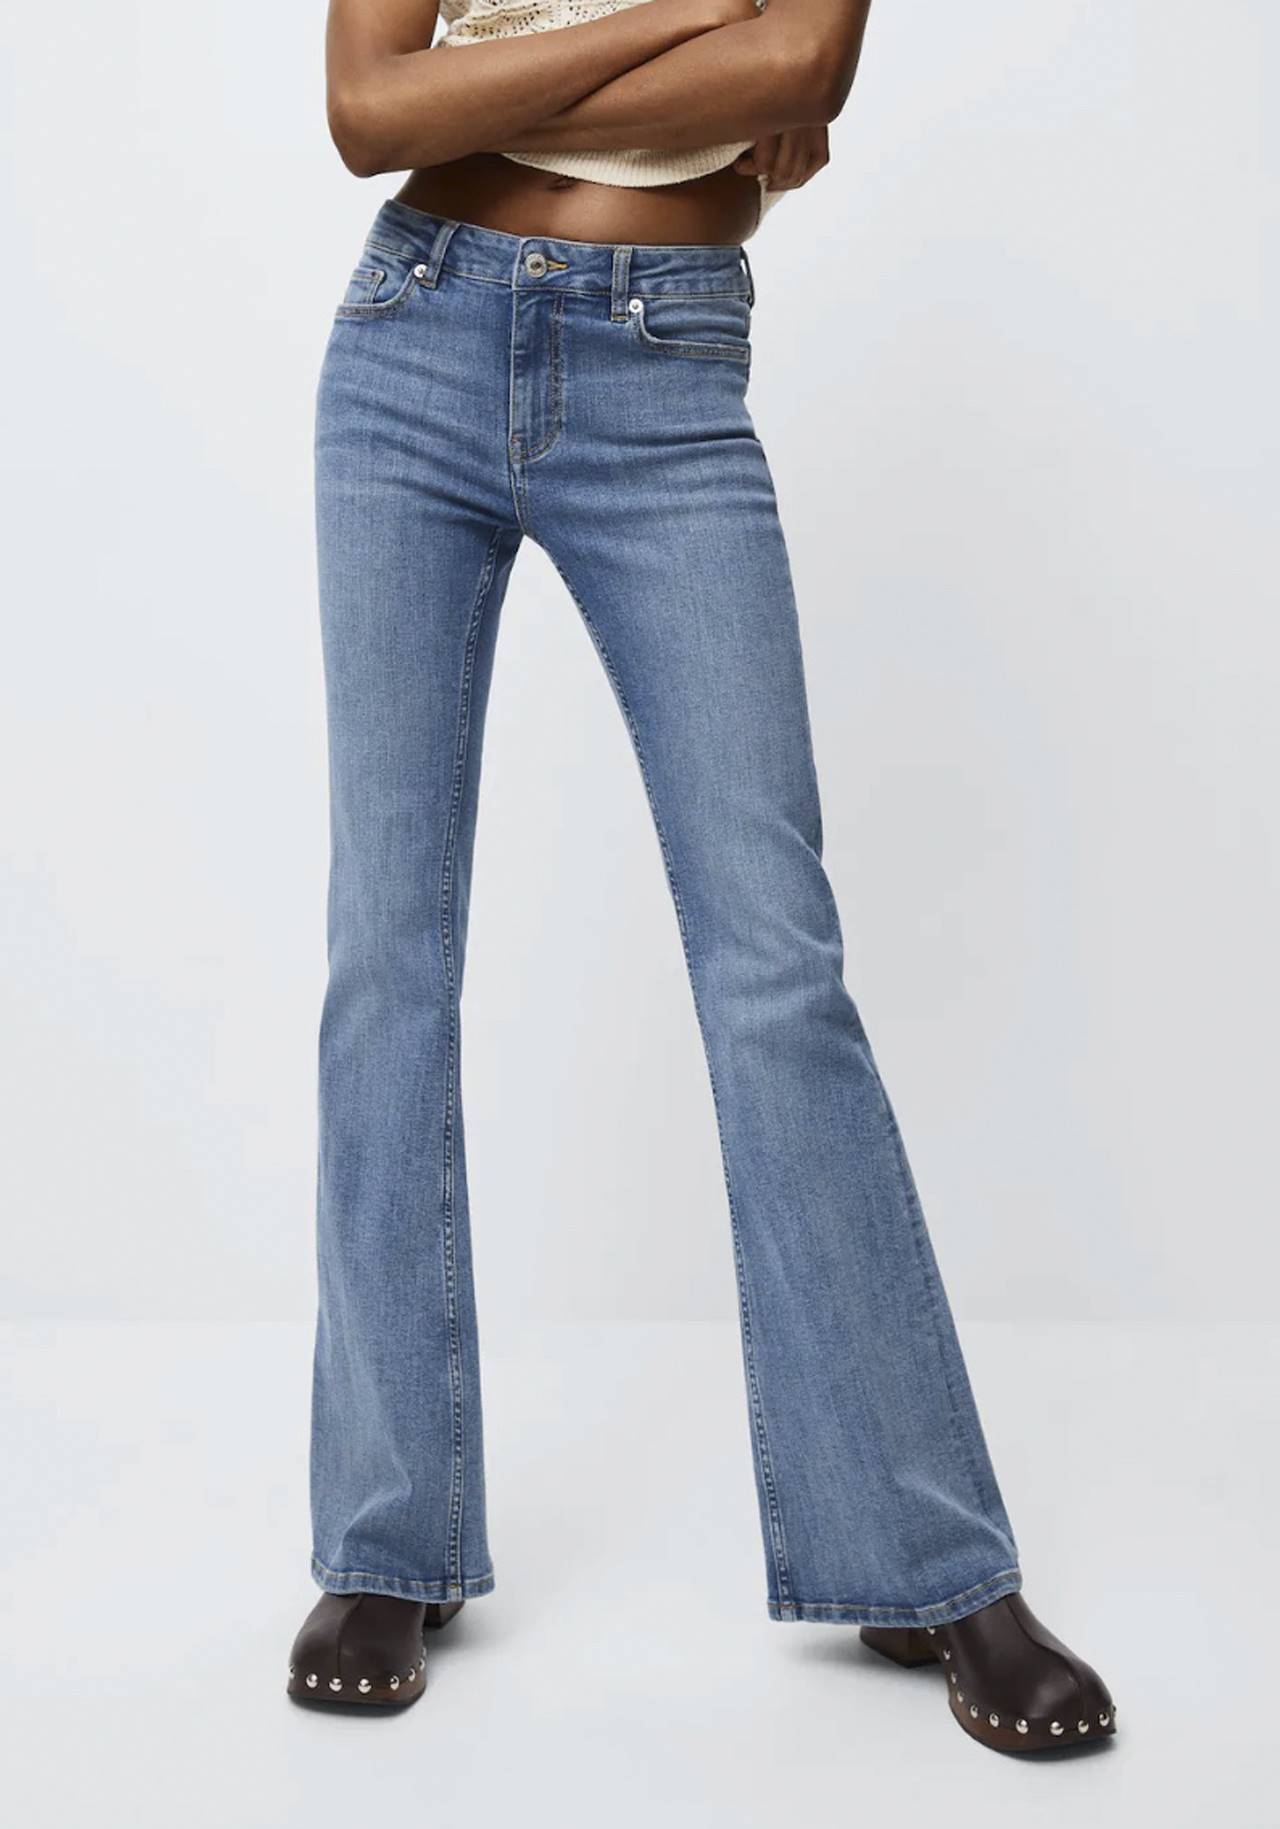 jeans mango copia